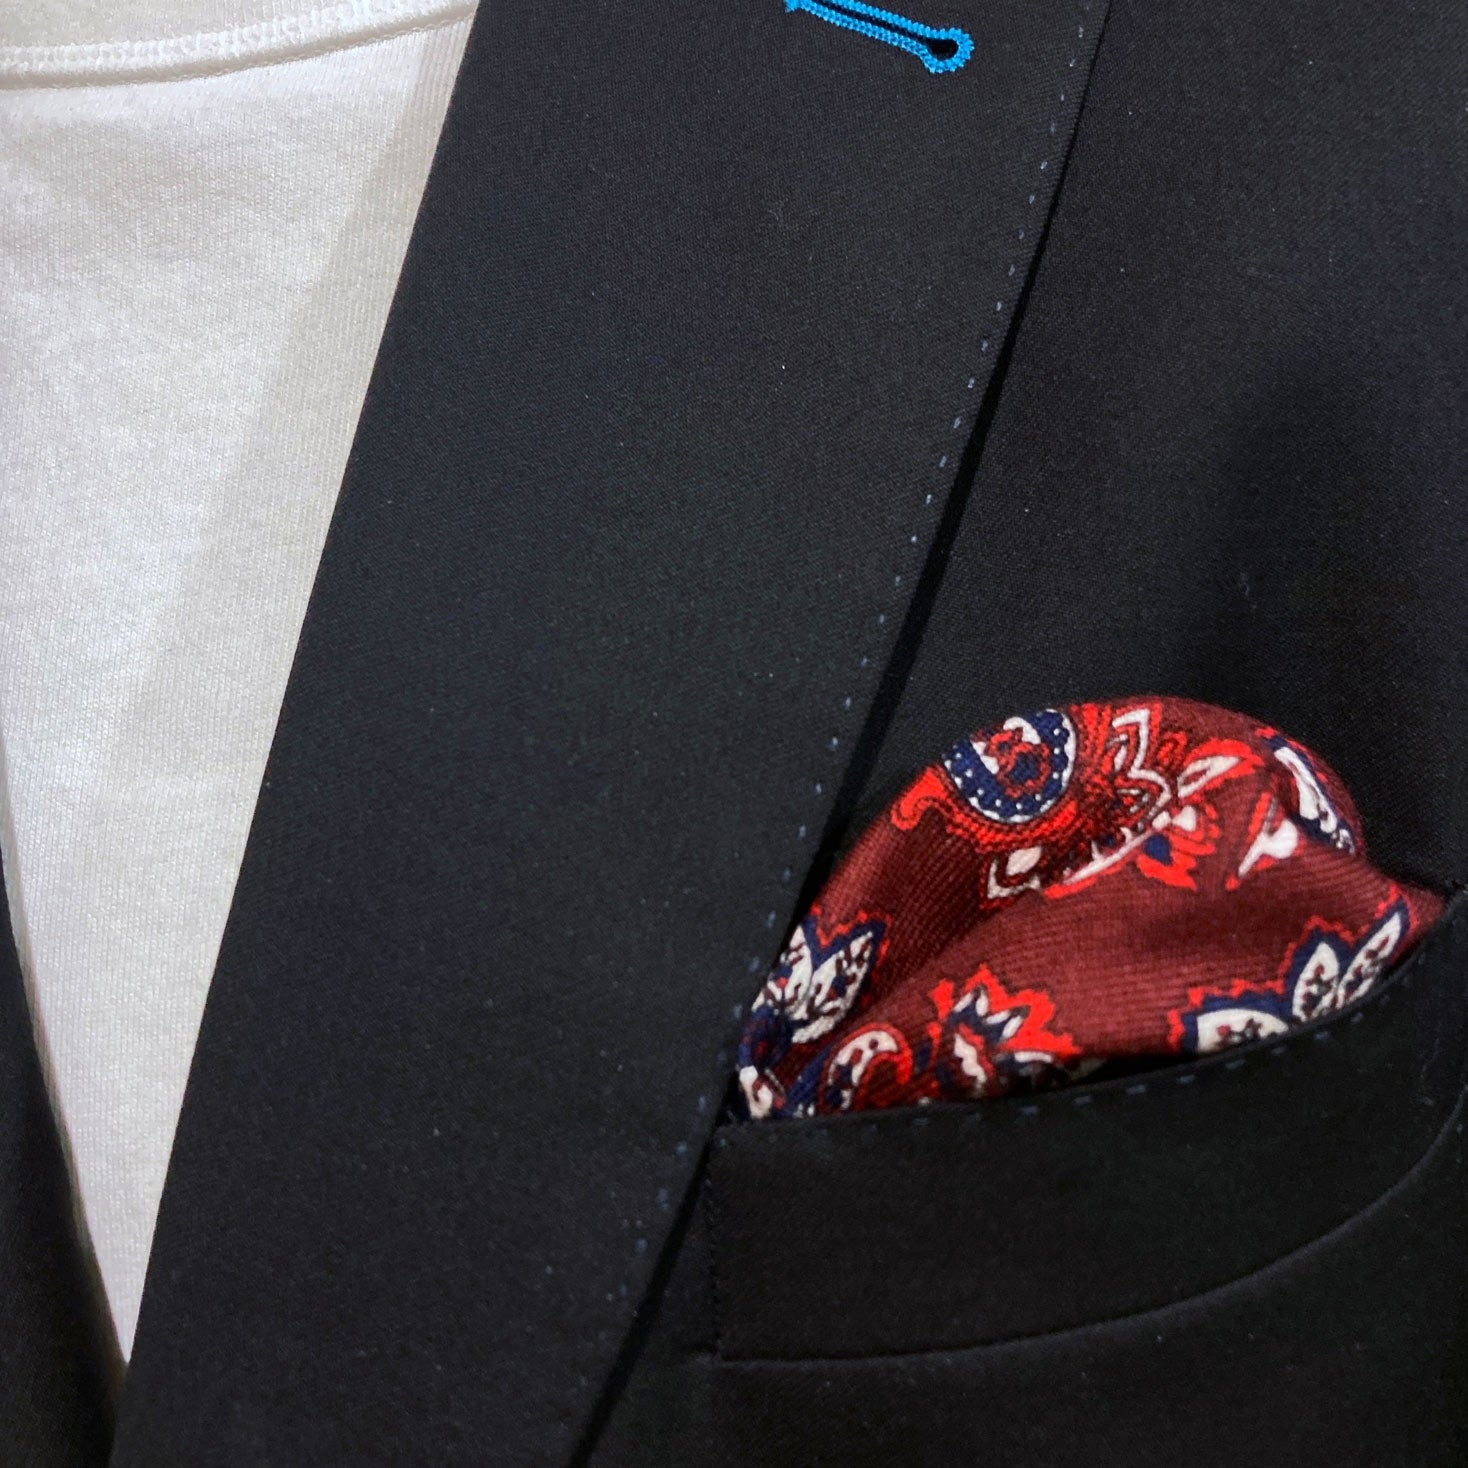 Close-up of 'kovalam' wool pocket square in breast pocket of dark suit jacket.